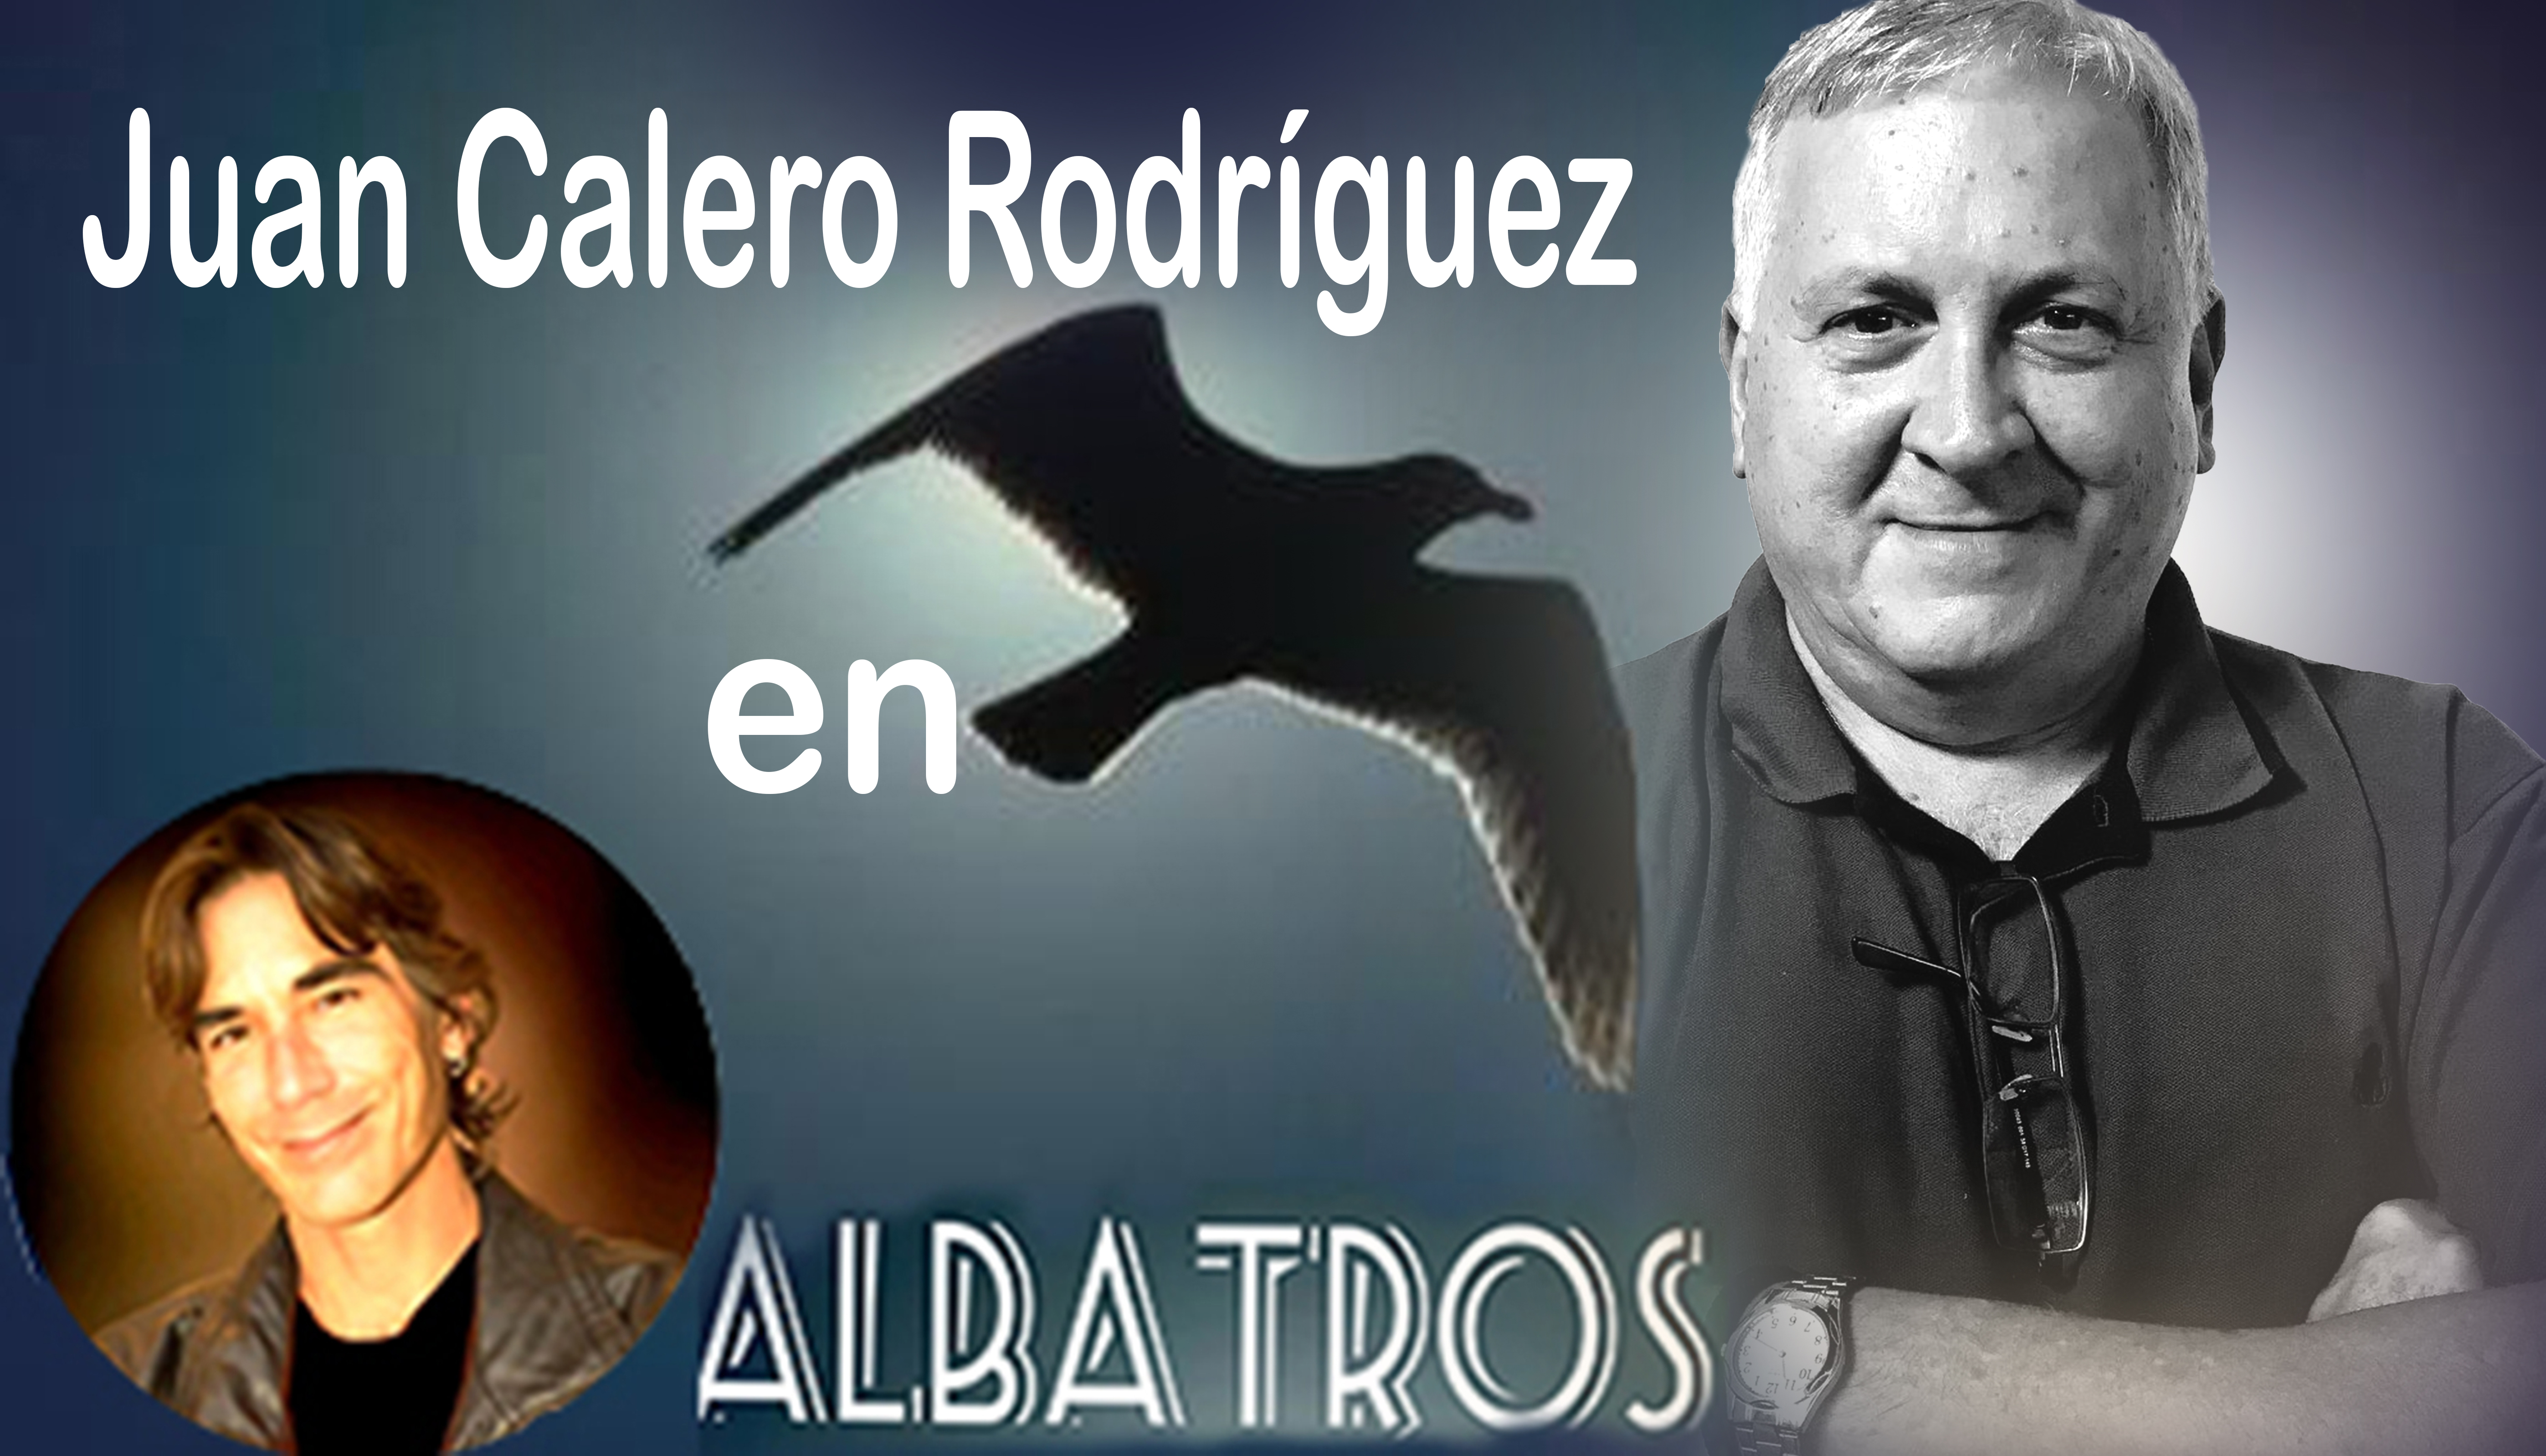 https://0201.nccdn.net/1_2/000/000/124/afe/calero-albatros.jpg